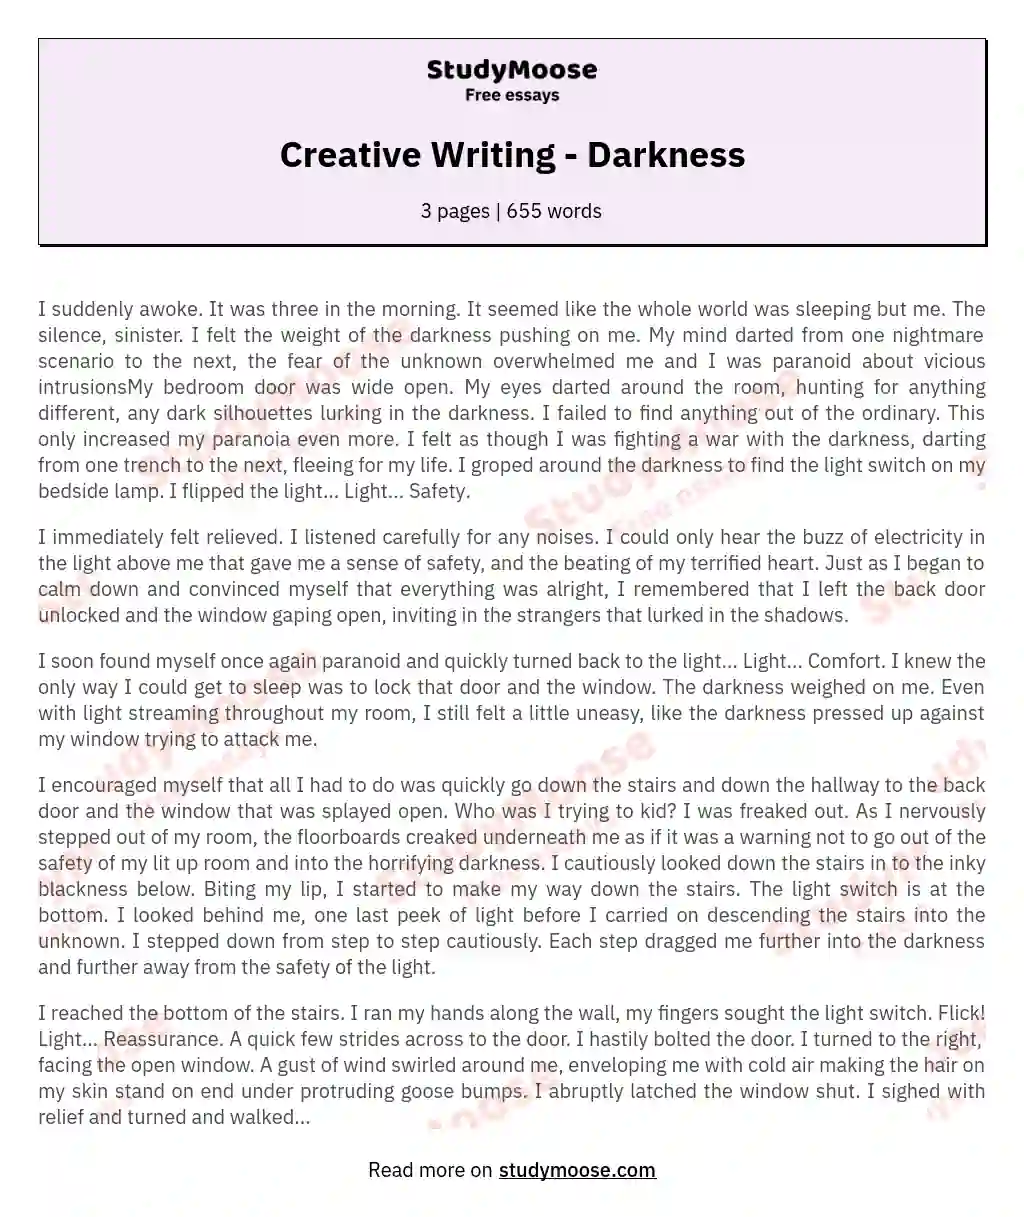 Creative Writing - Darkness